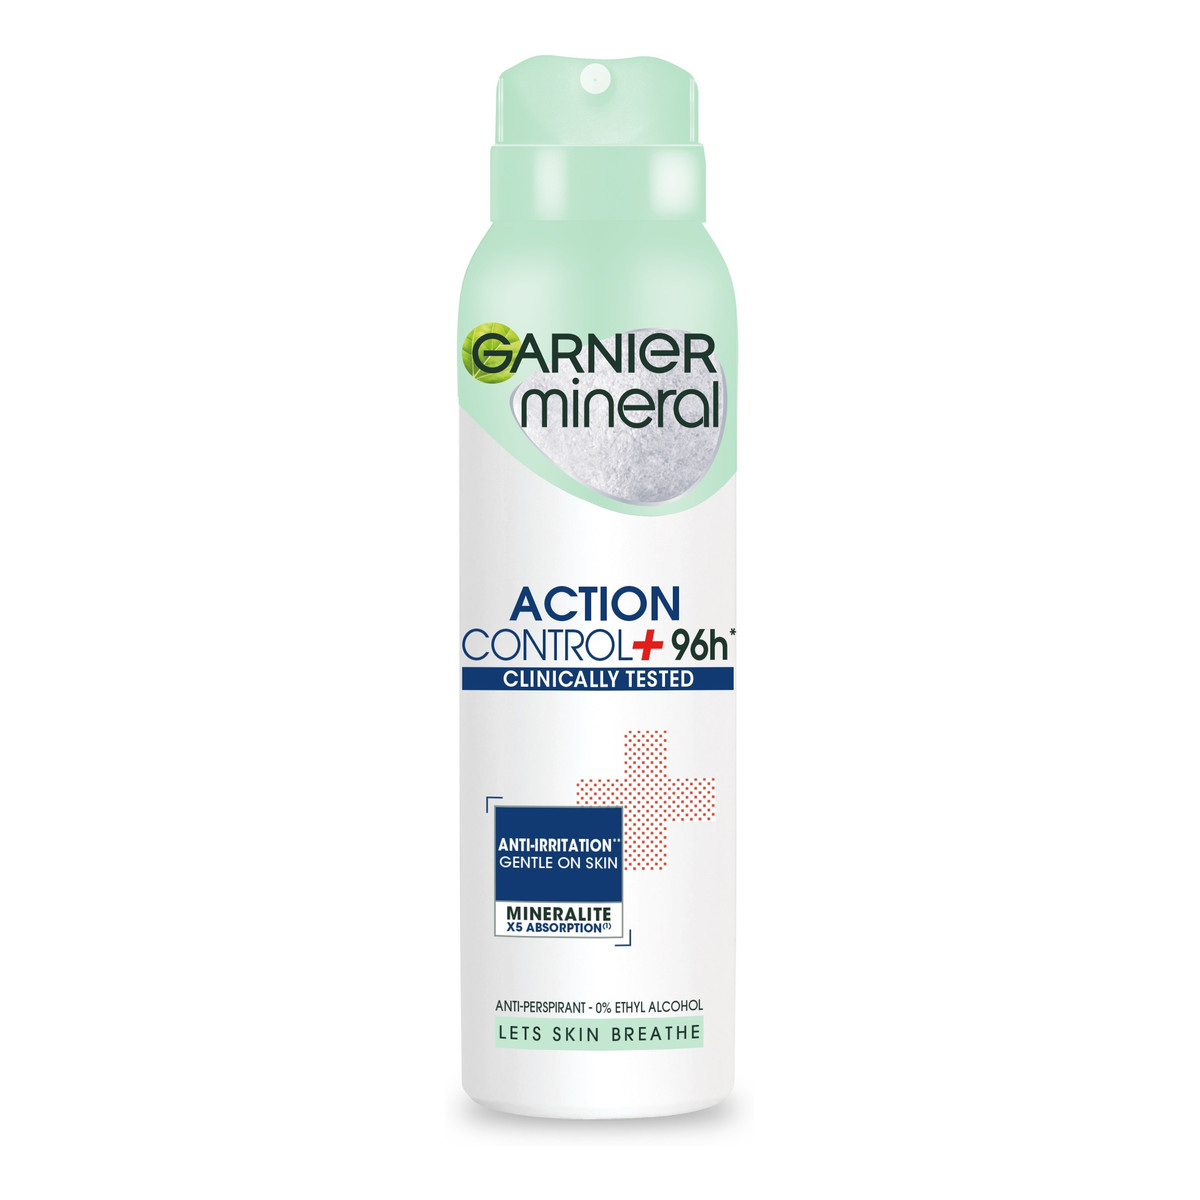 Garnier Mineral Dezodorant spray Action Control + Clinically Tested 96h 150ml